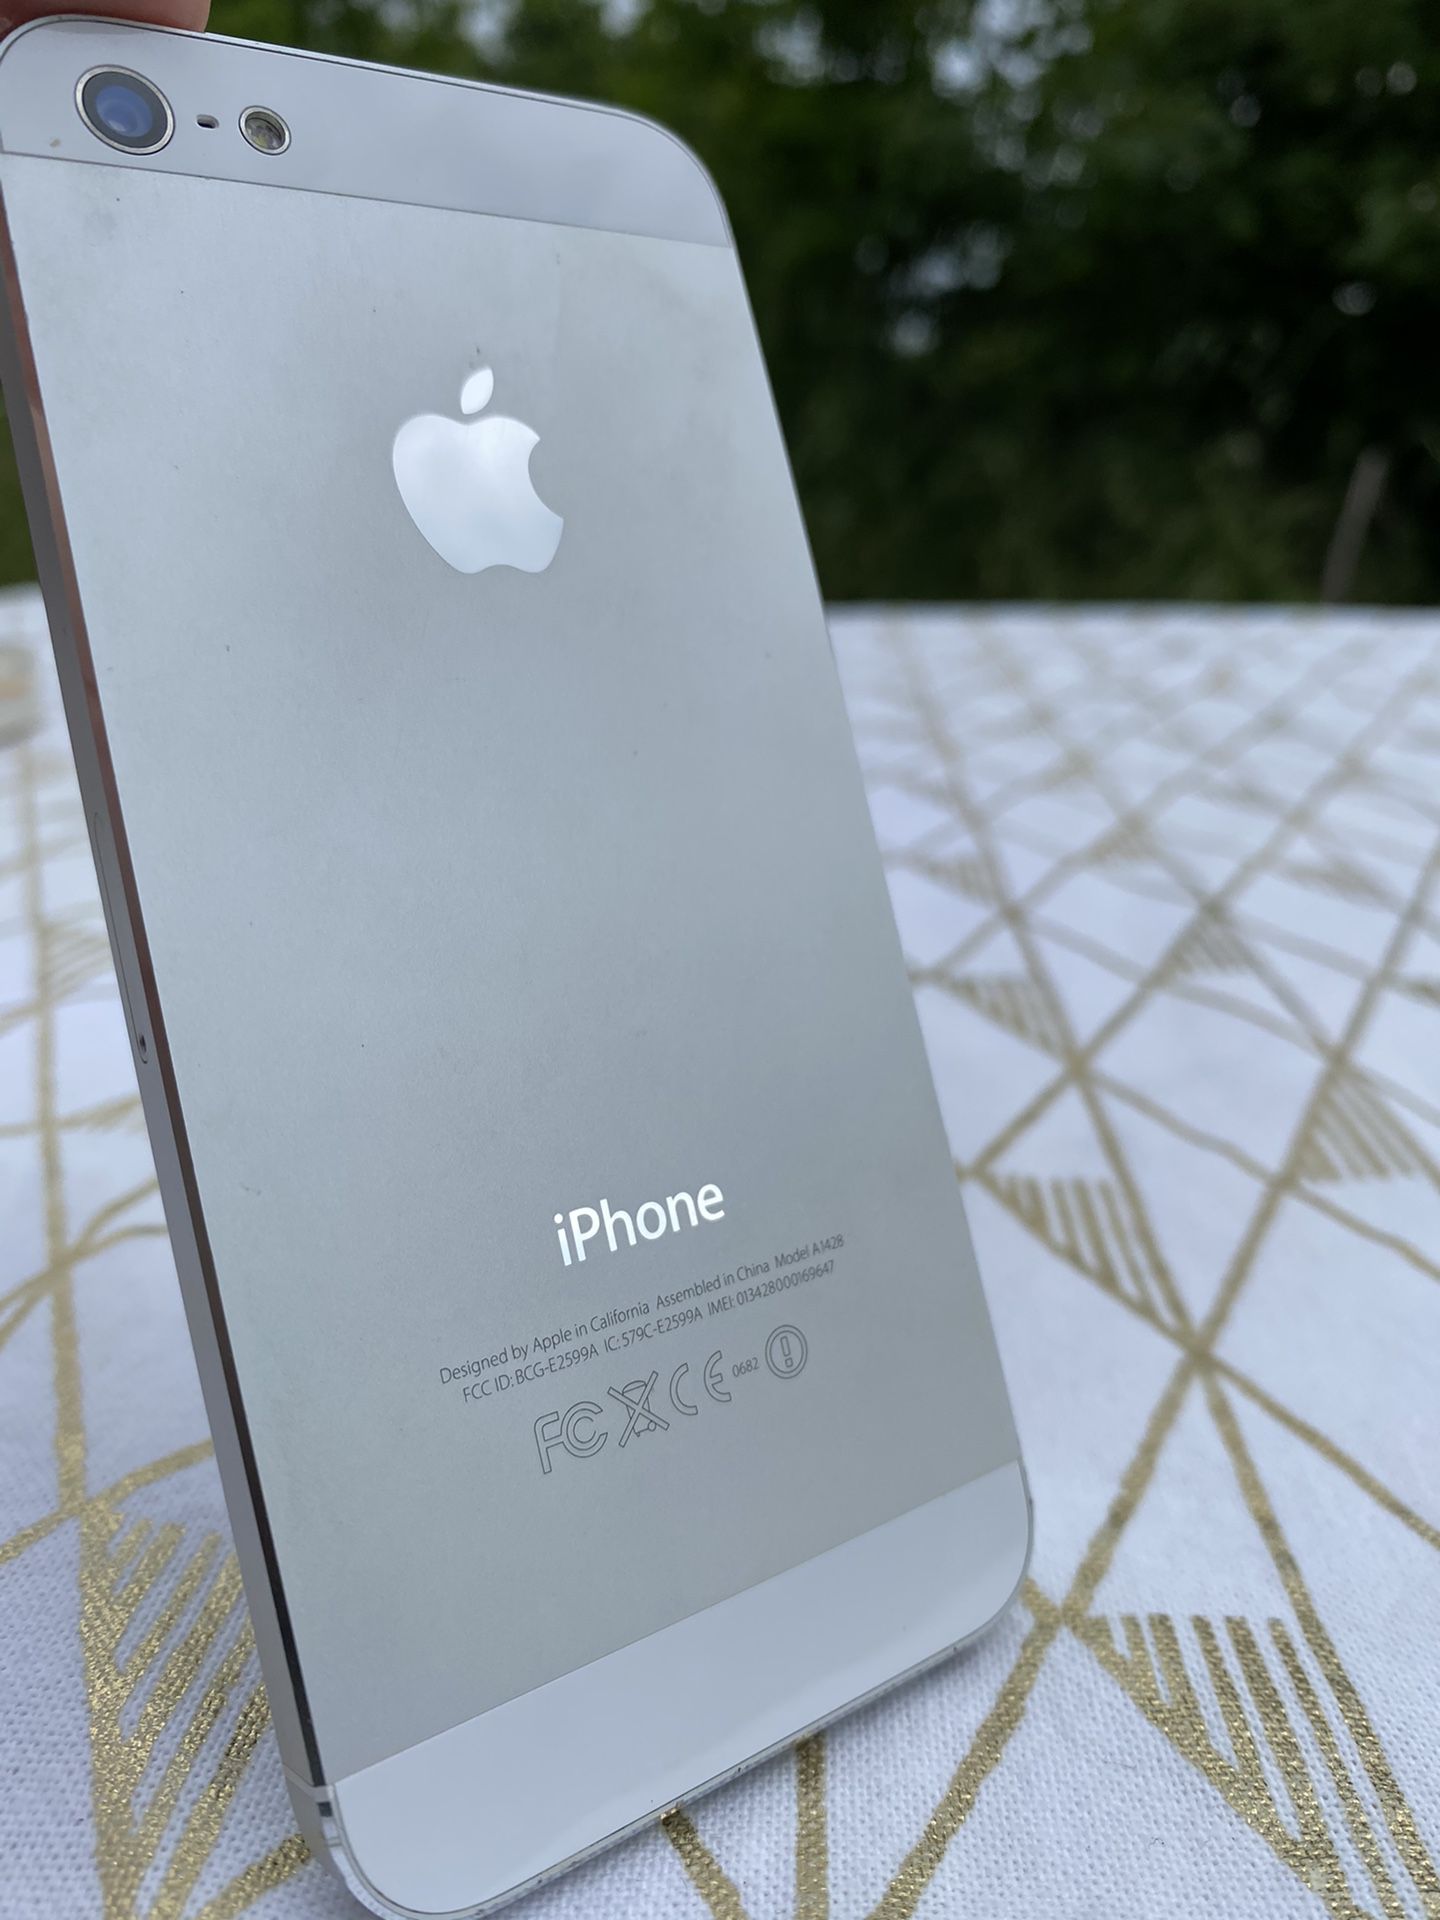 Apple iPhone 5 Model A1428